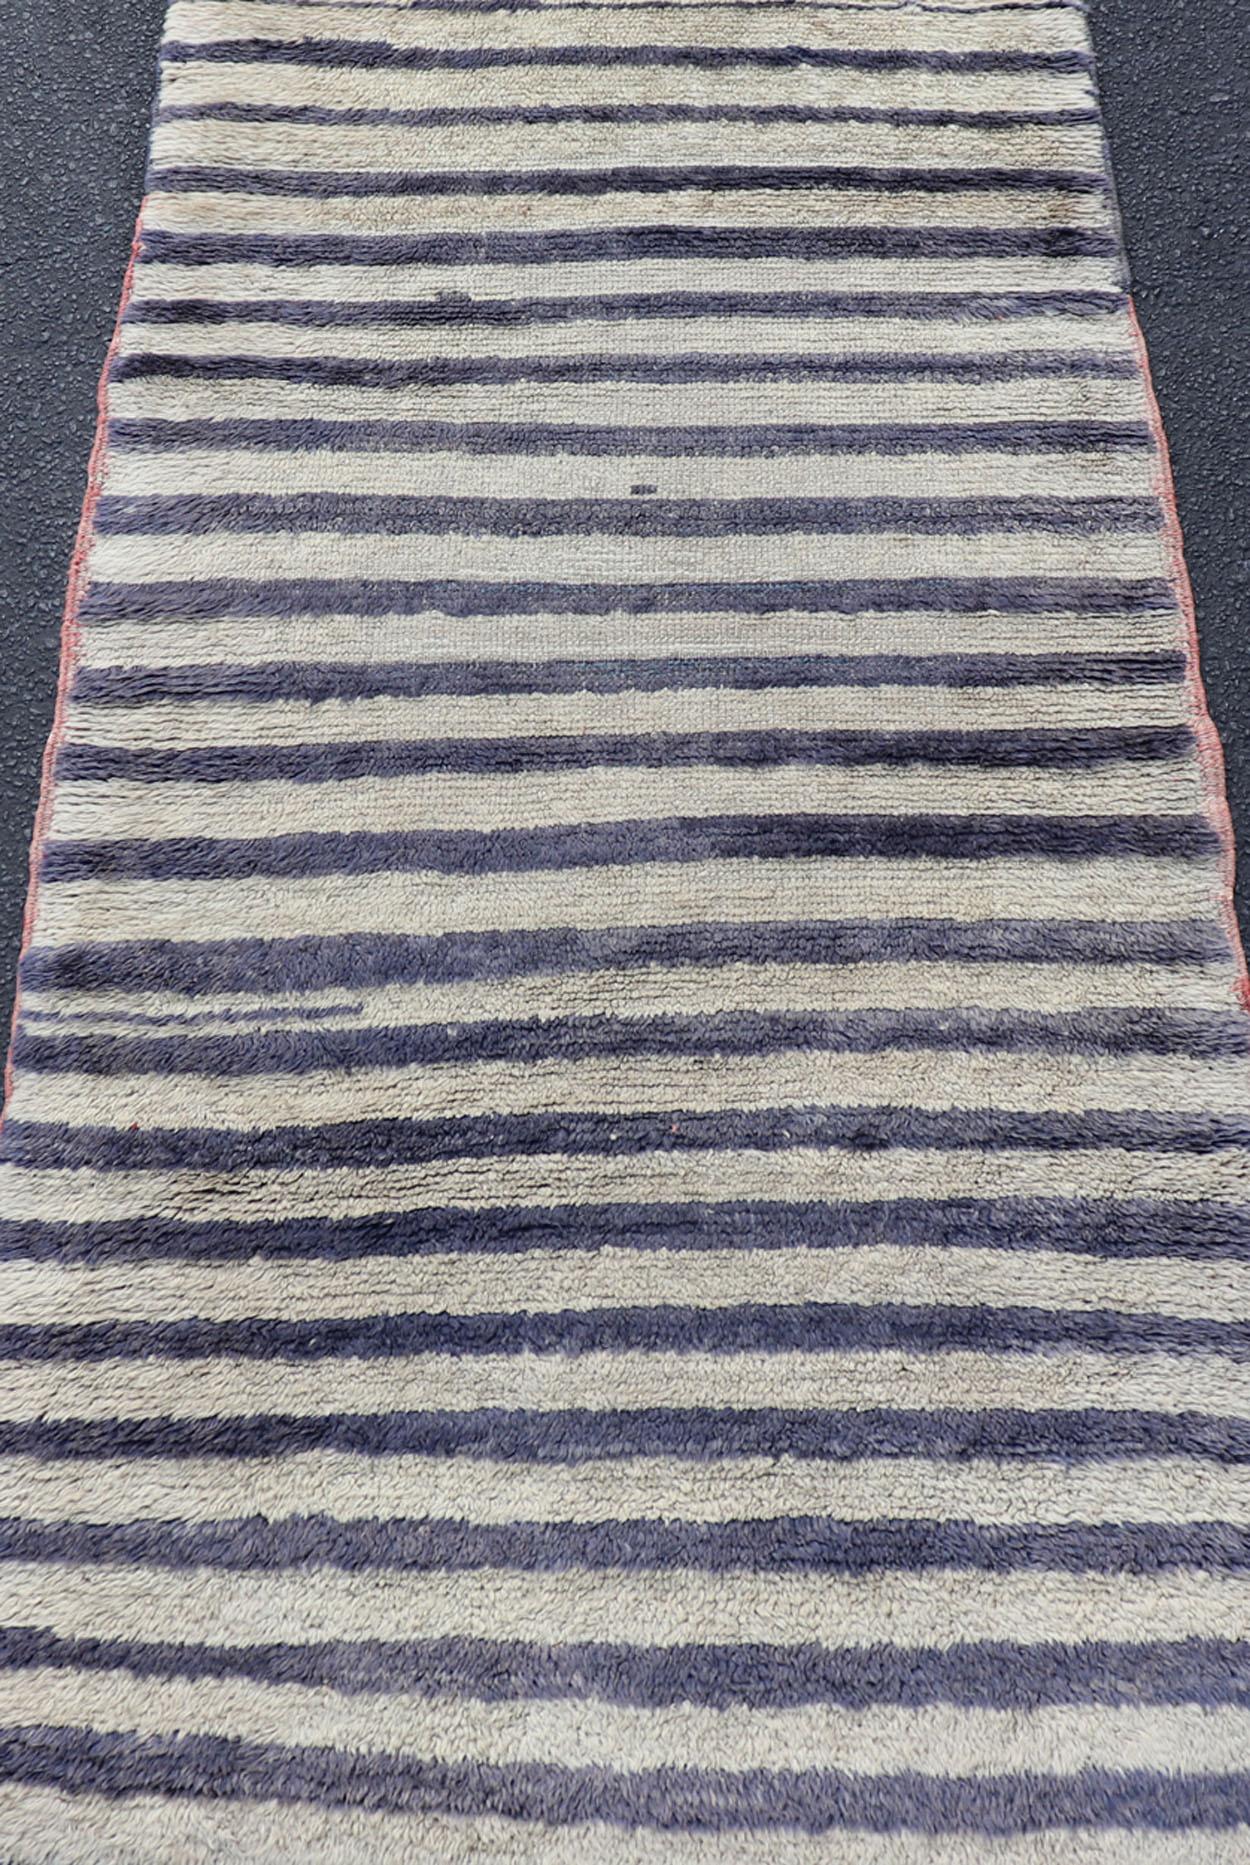 Turkish Angora Vintage Tulu Carpet with Stripe Pattern Light Taupe & Navy Blue For Sale 3